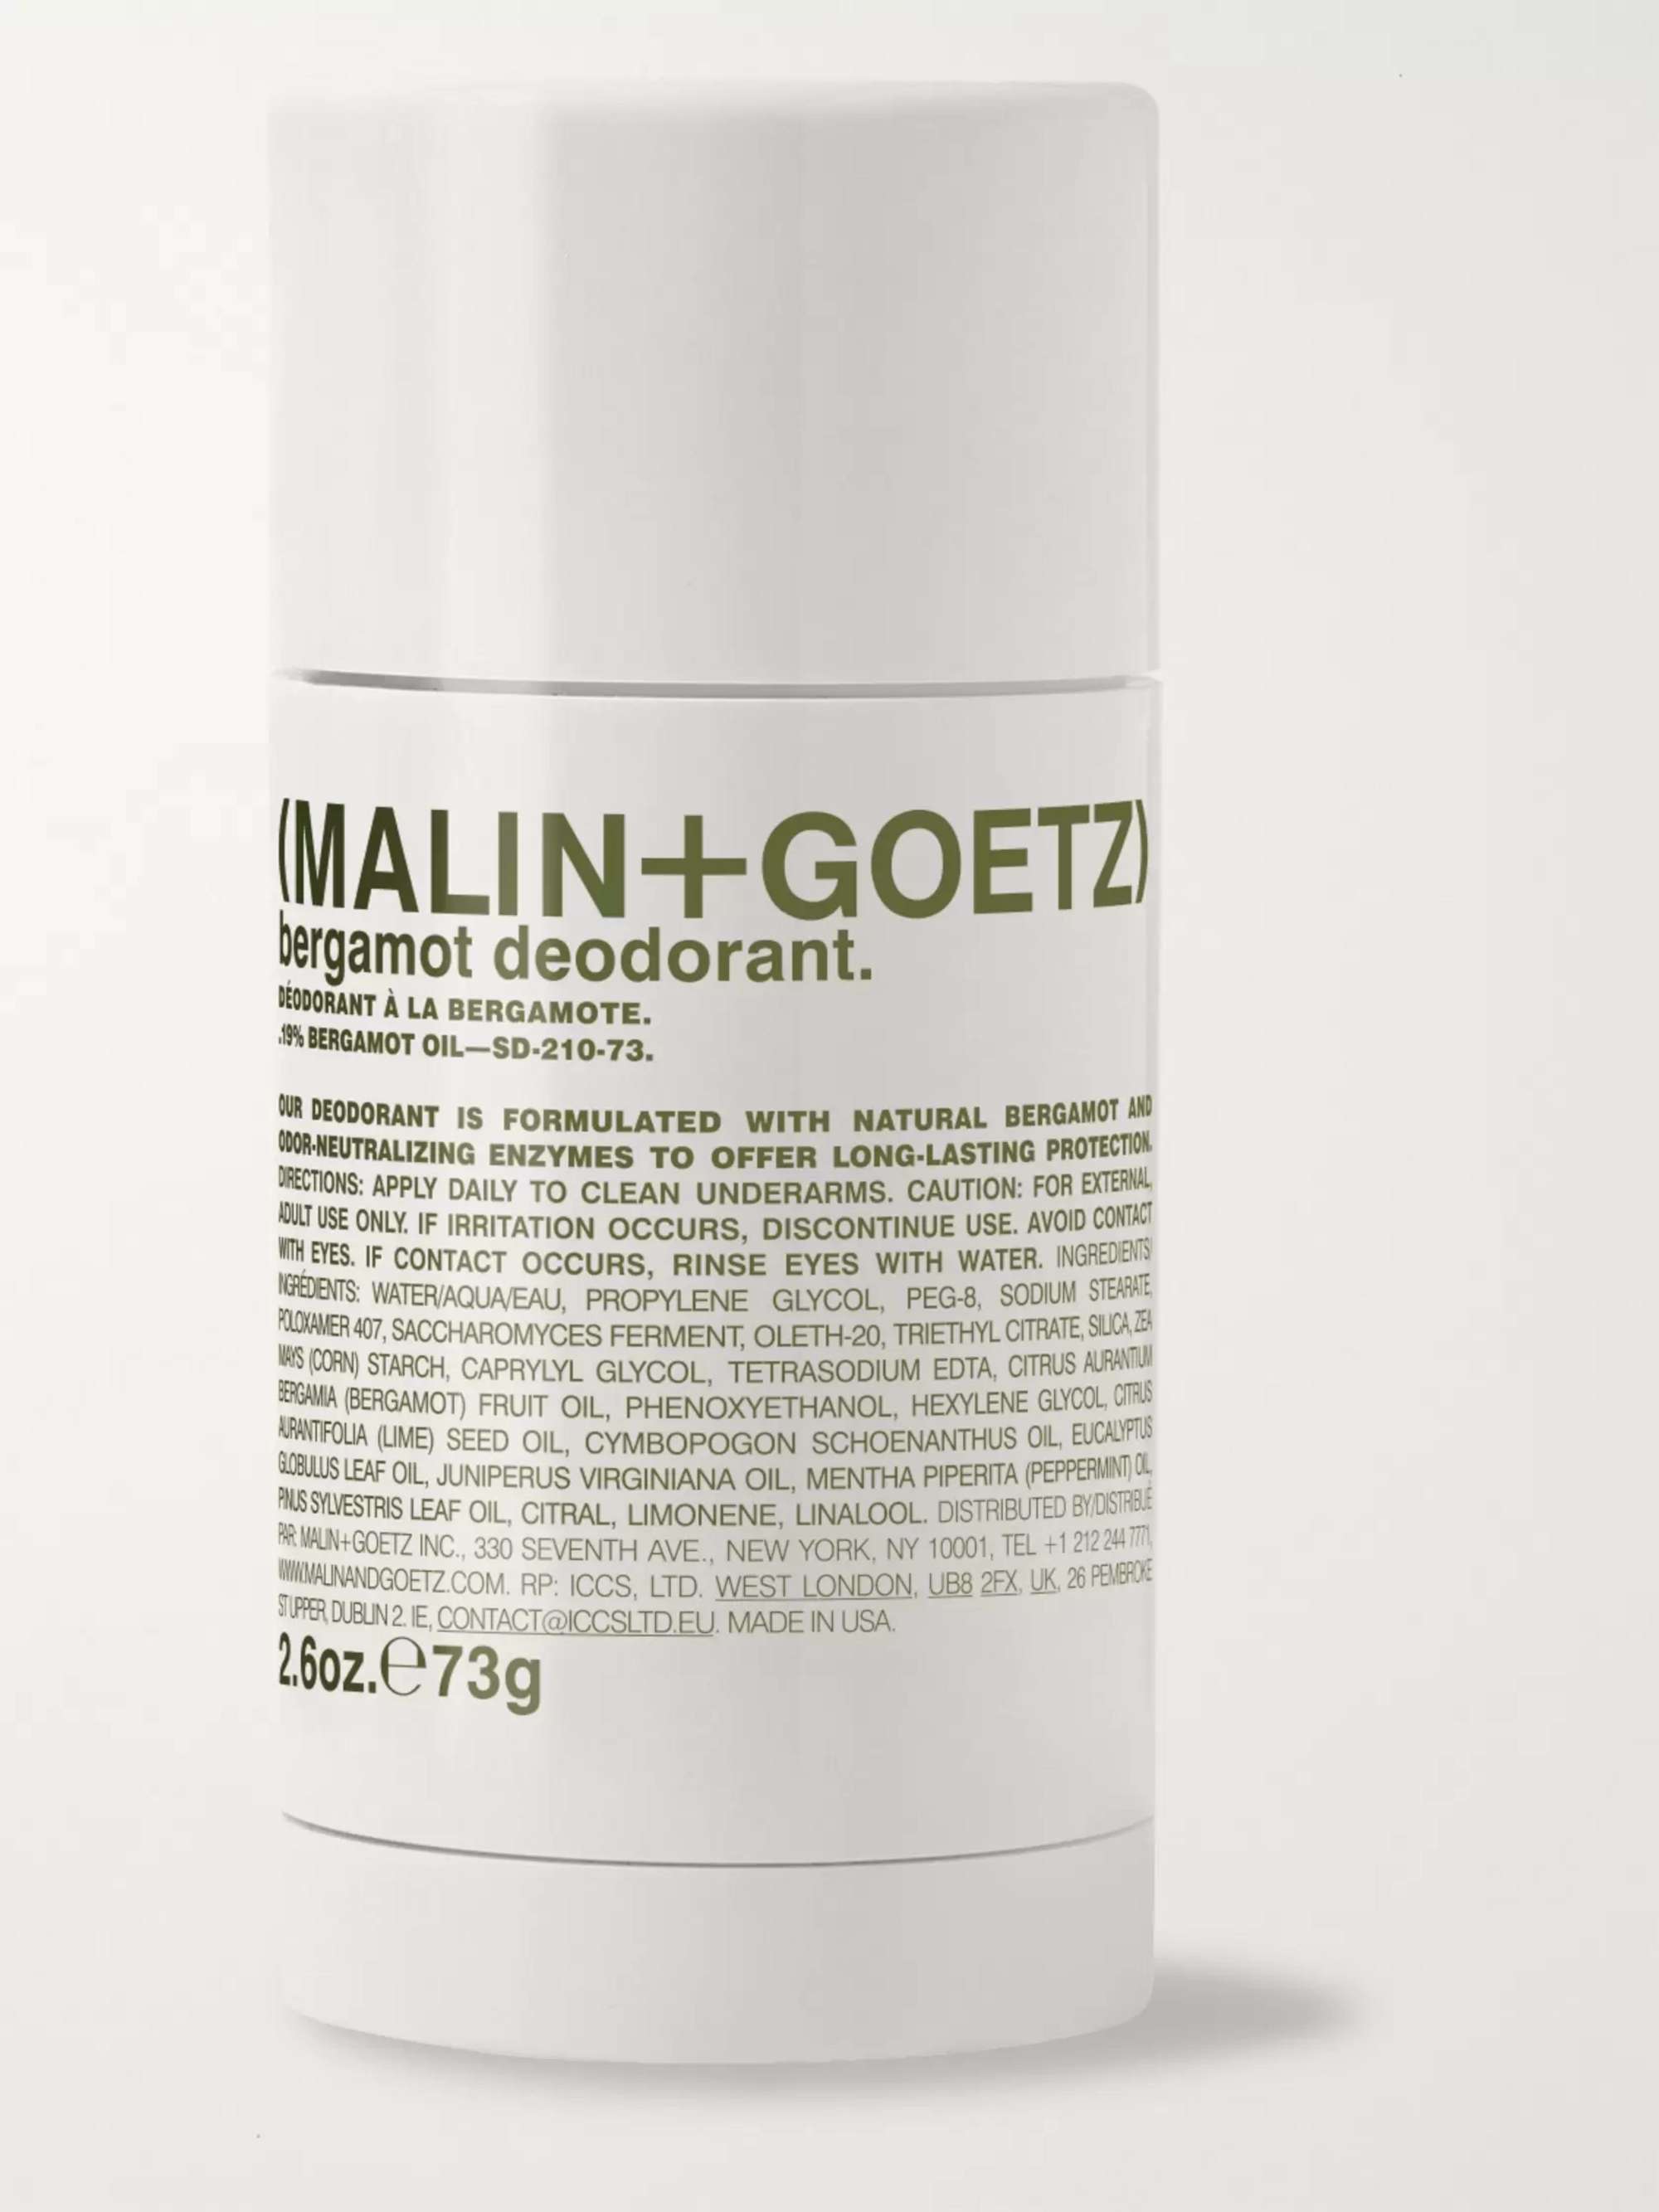 MALIN + GOETZ Bergamot Deodorant, 73g